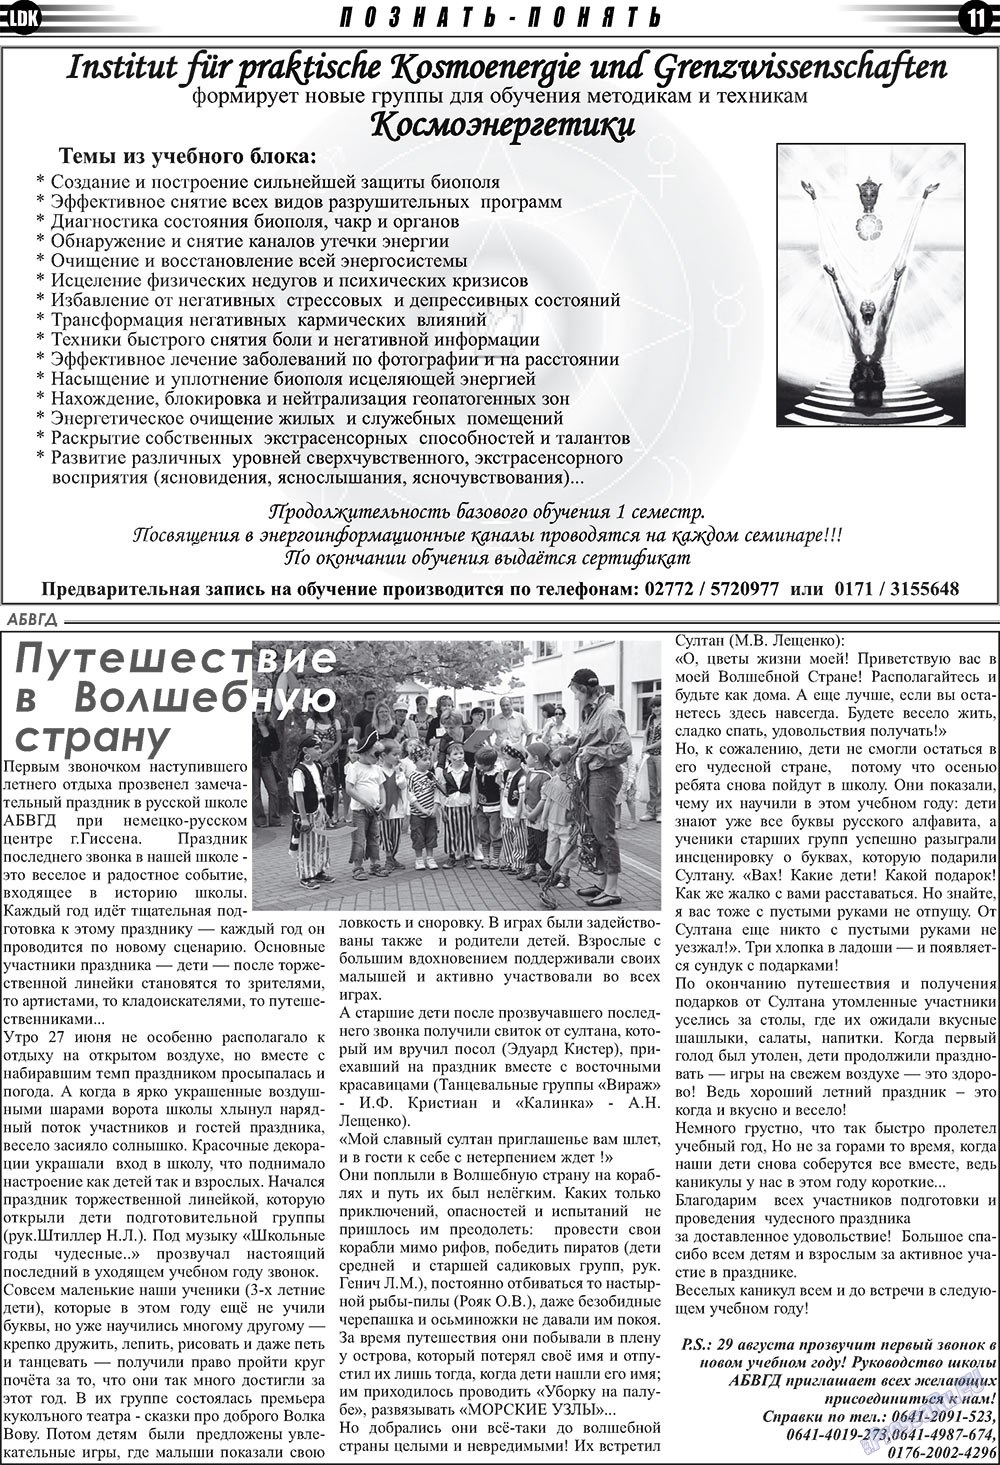 LDK по-русски, газета. 2009 №8 стр.11